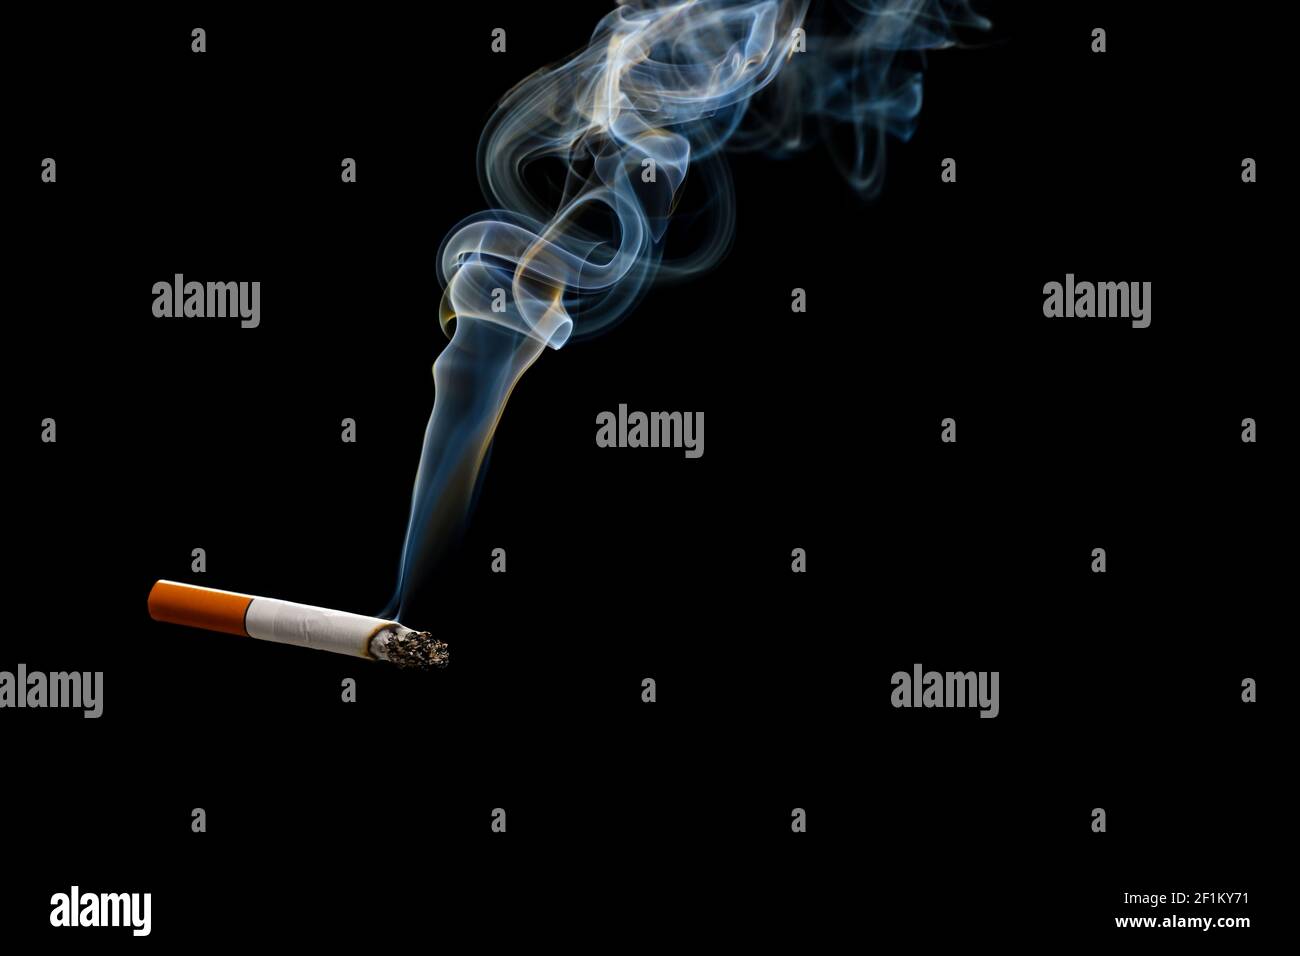 Cigarette with smoke on dark background Stock Photo - Alamy